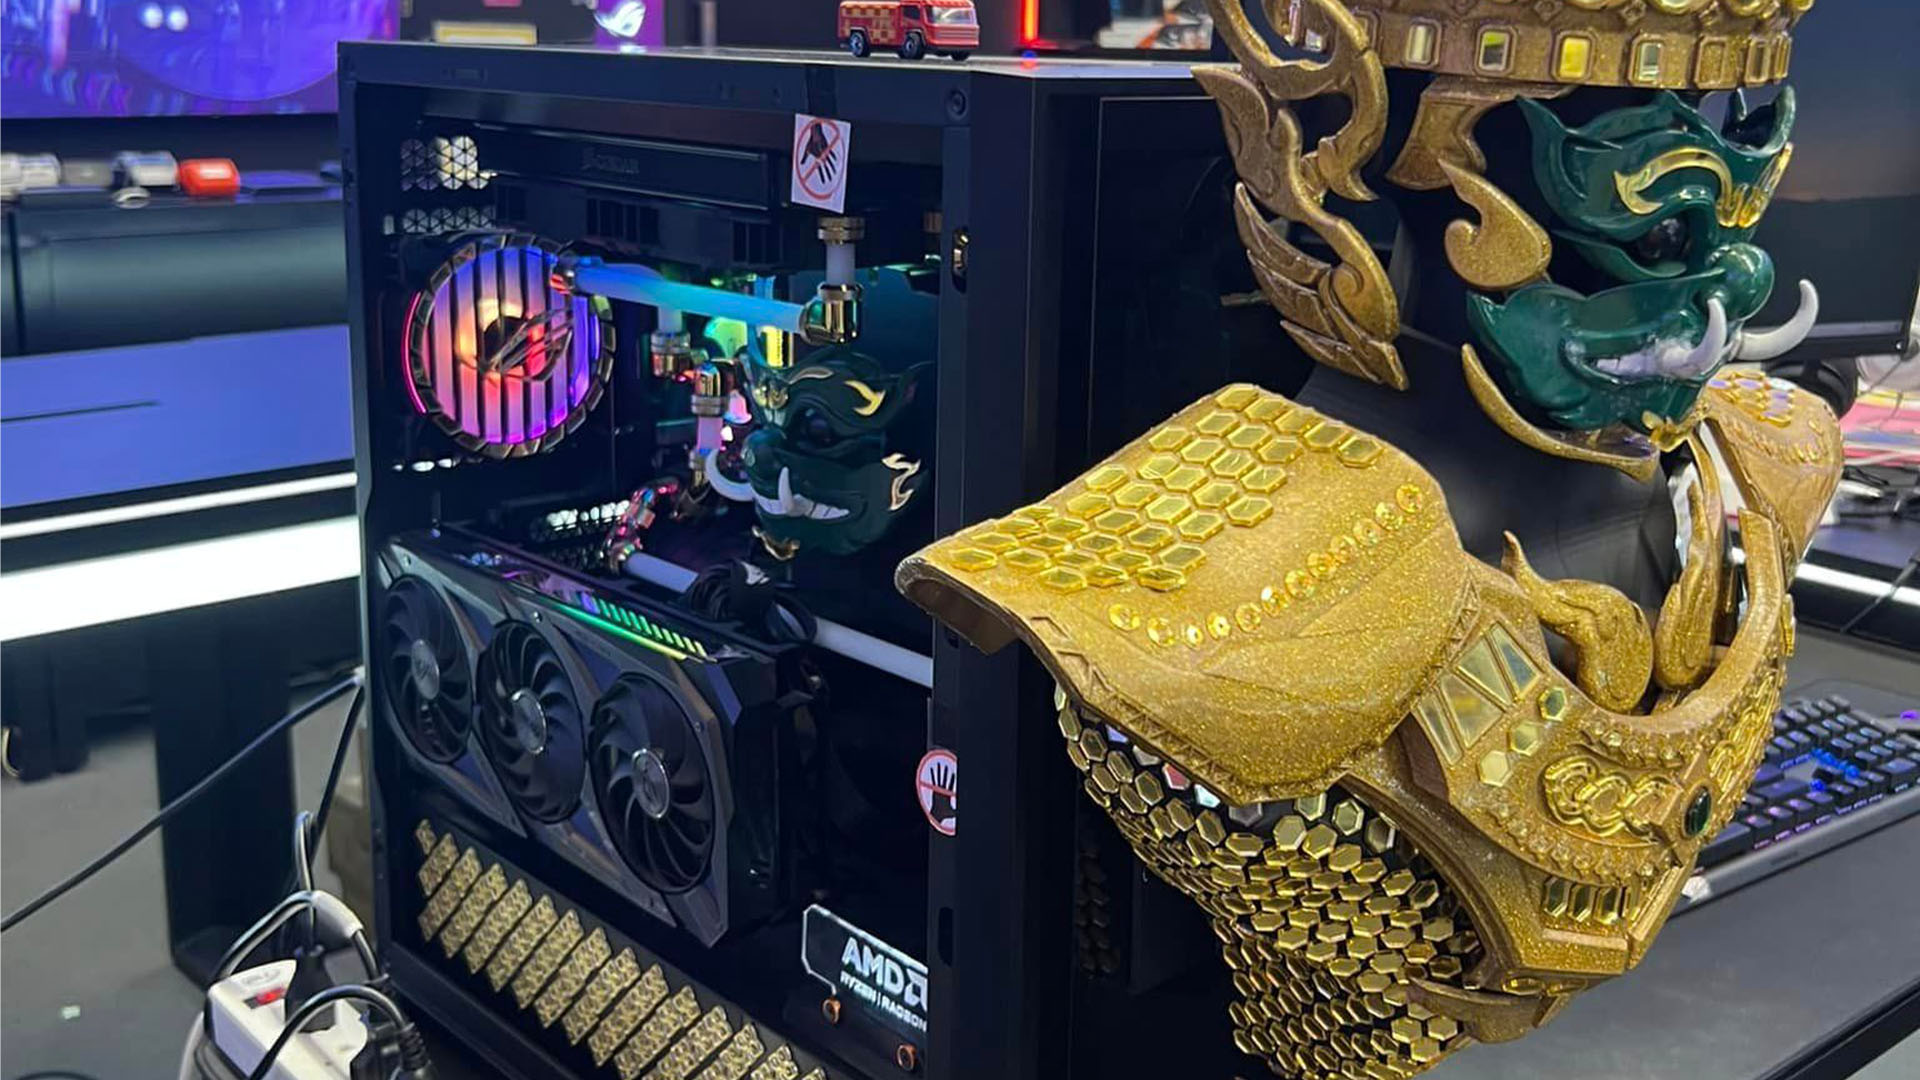 Das Innere des AMD Thotsakan Gaming-PCs